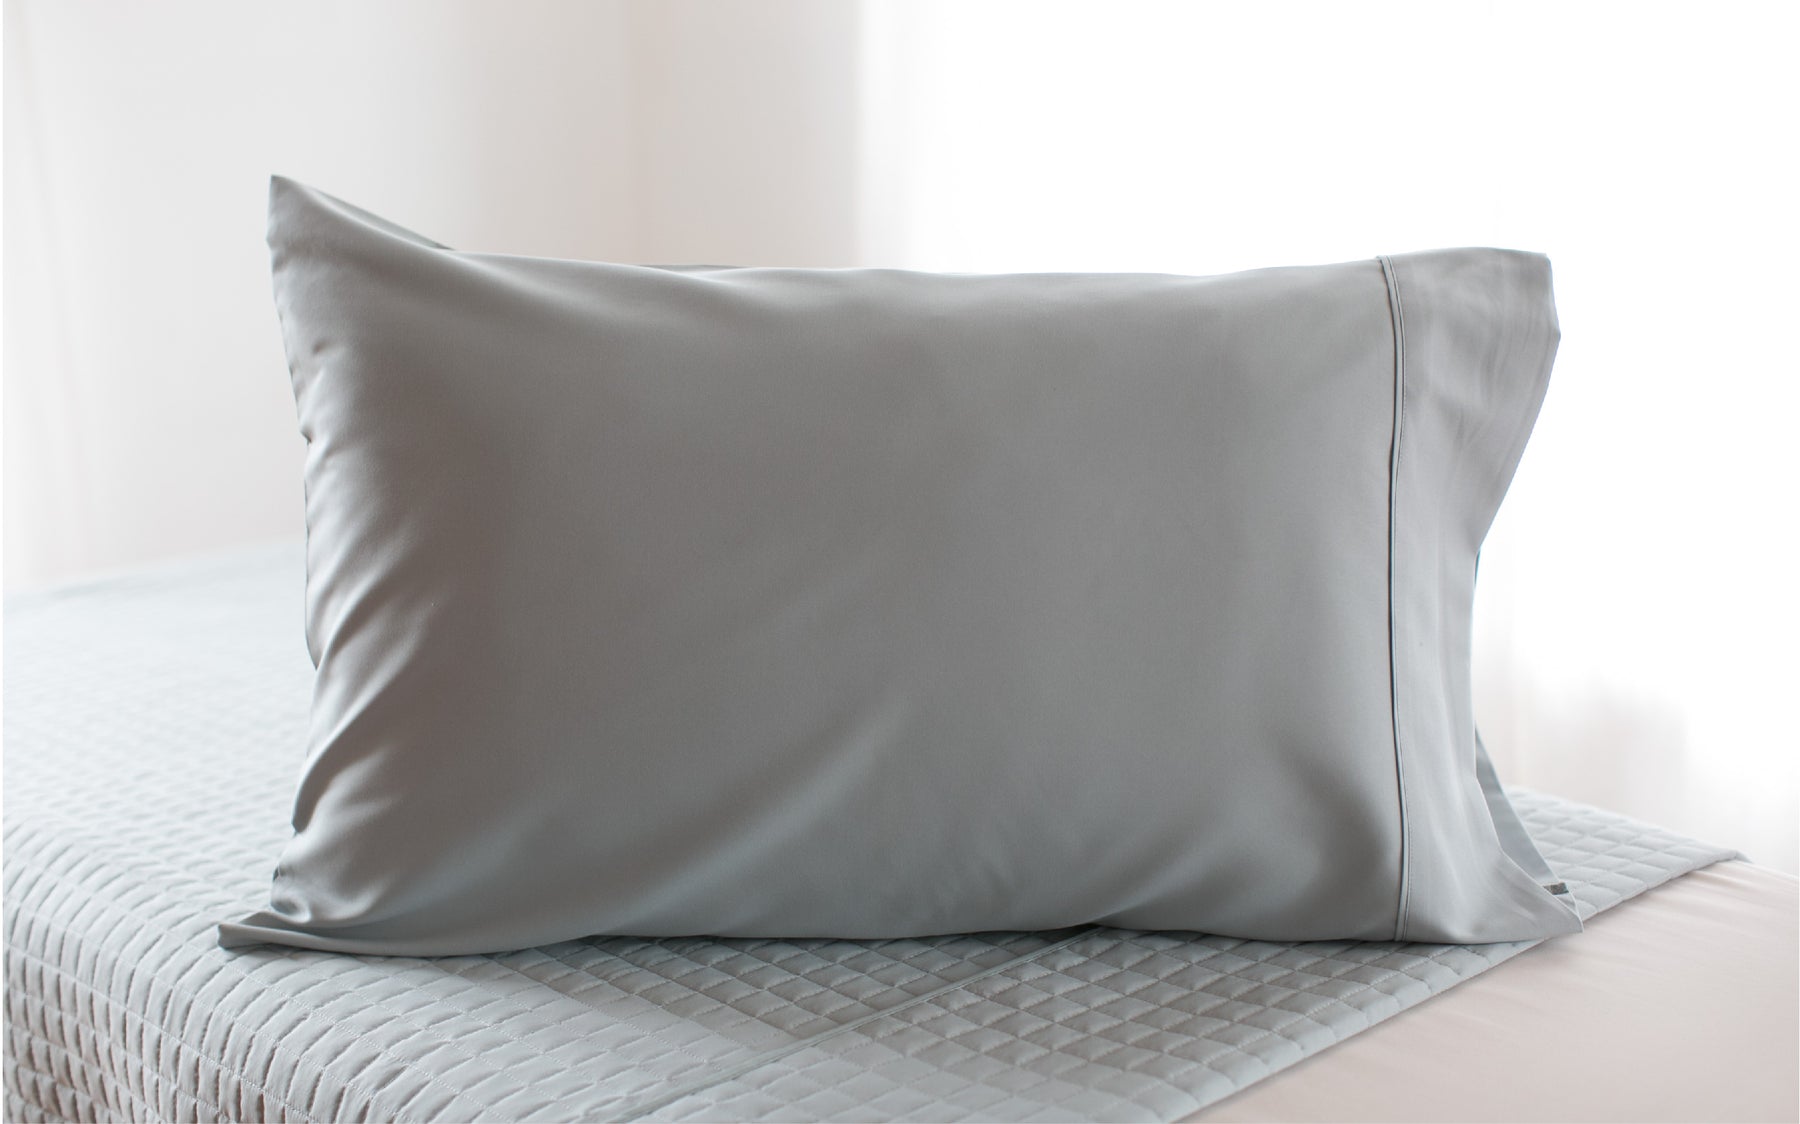 Luxury Bedding Set, Comphy SoftSpa™